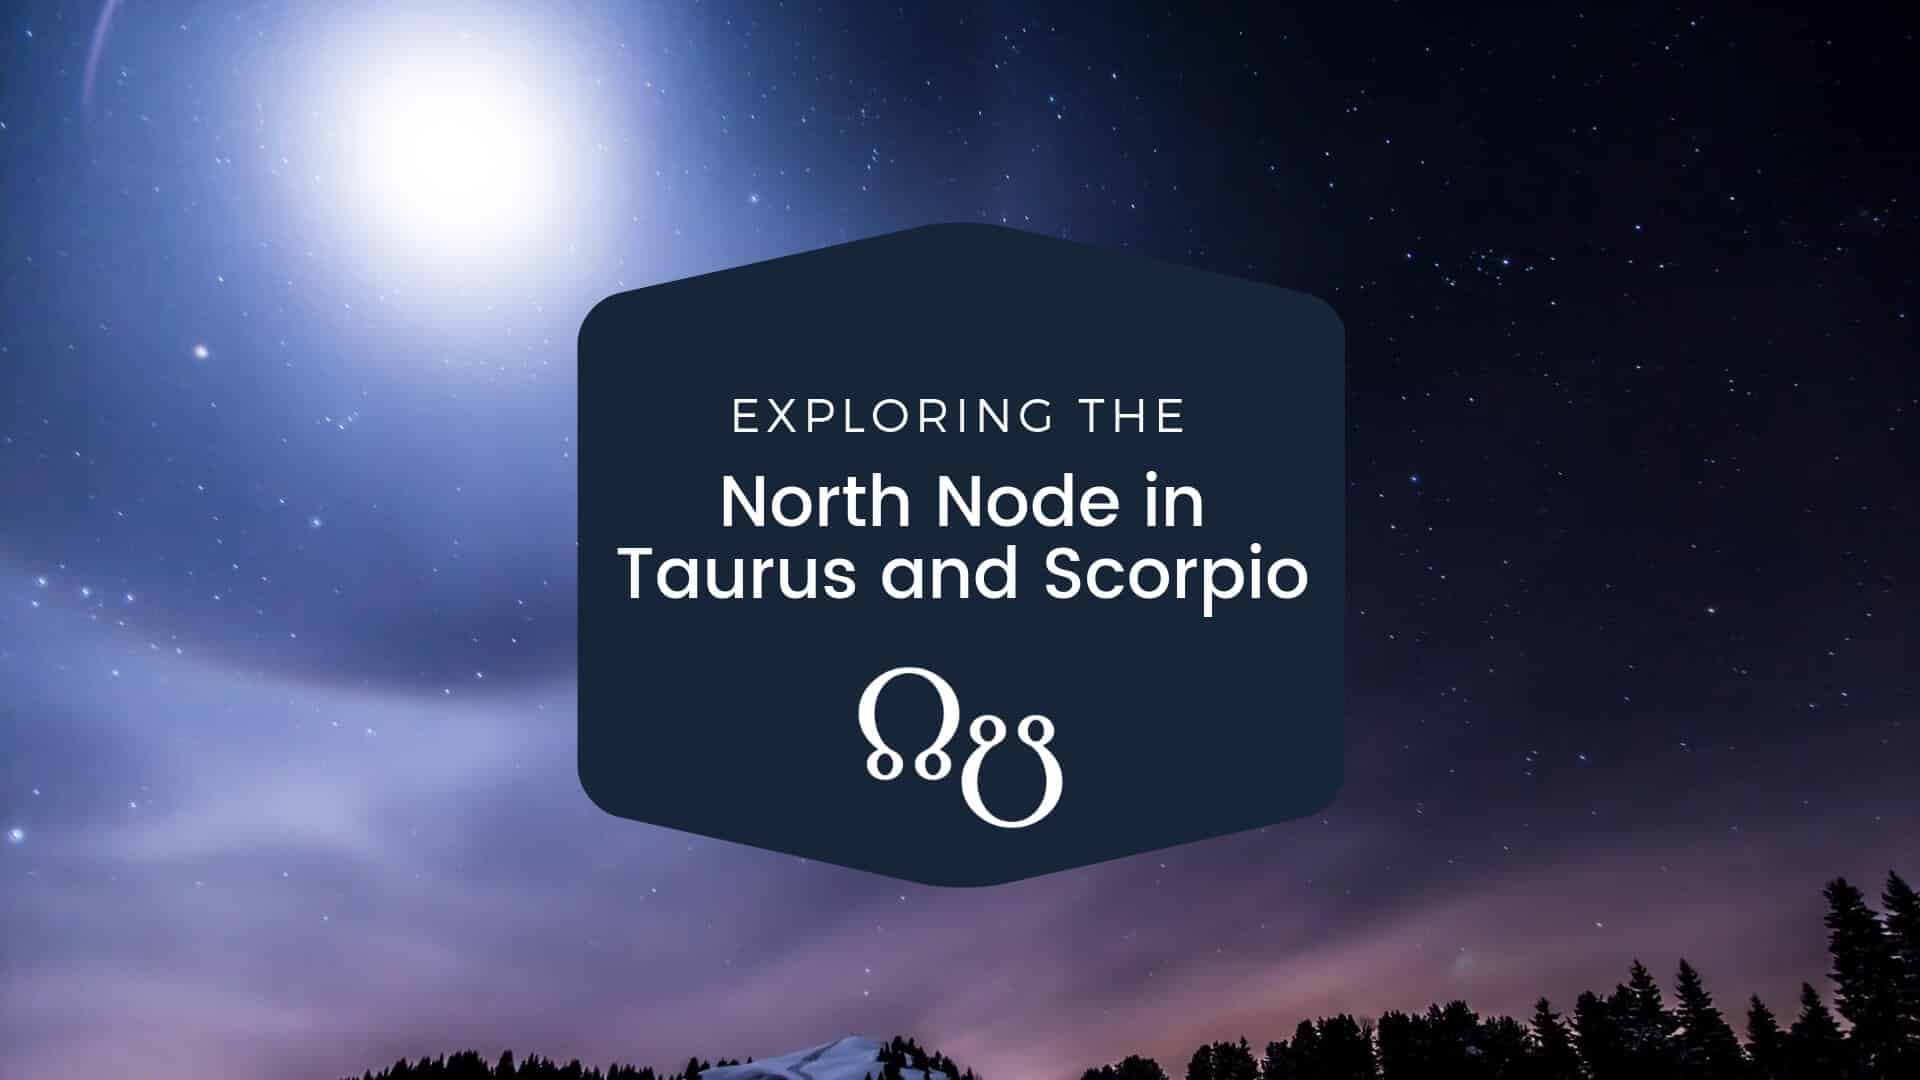 North Node in Taurus and Scorpio